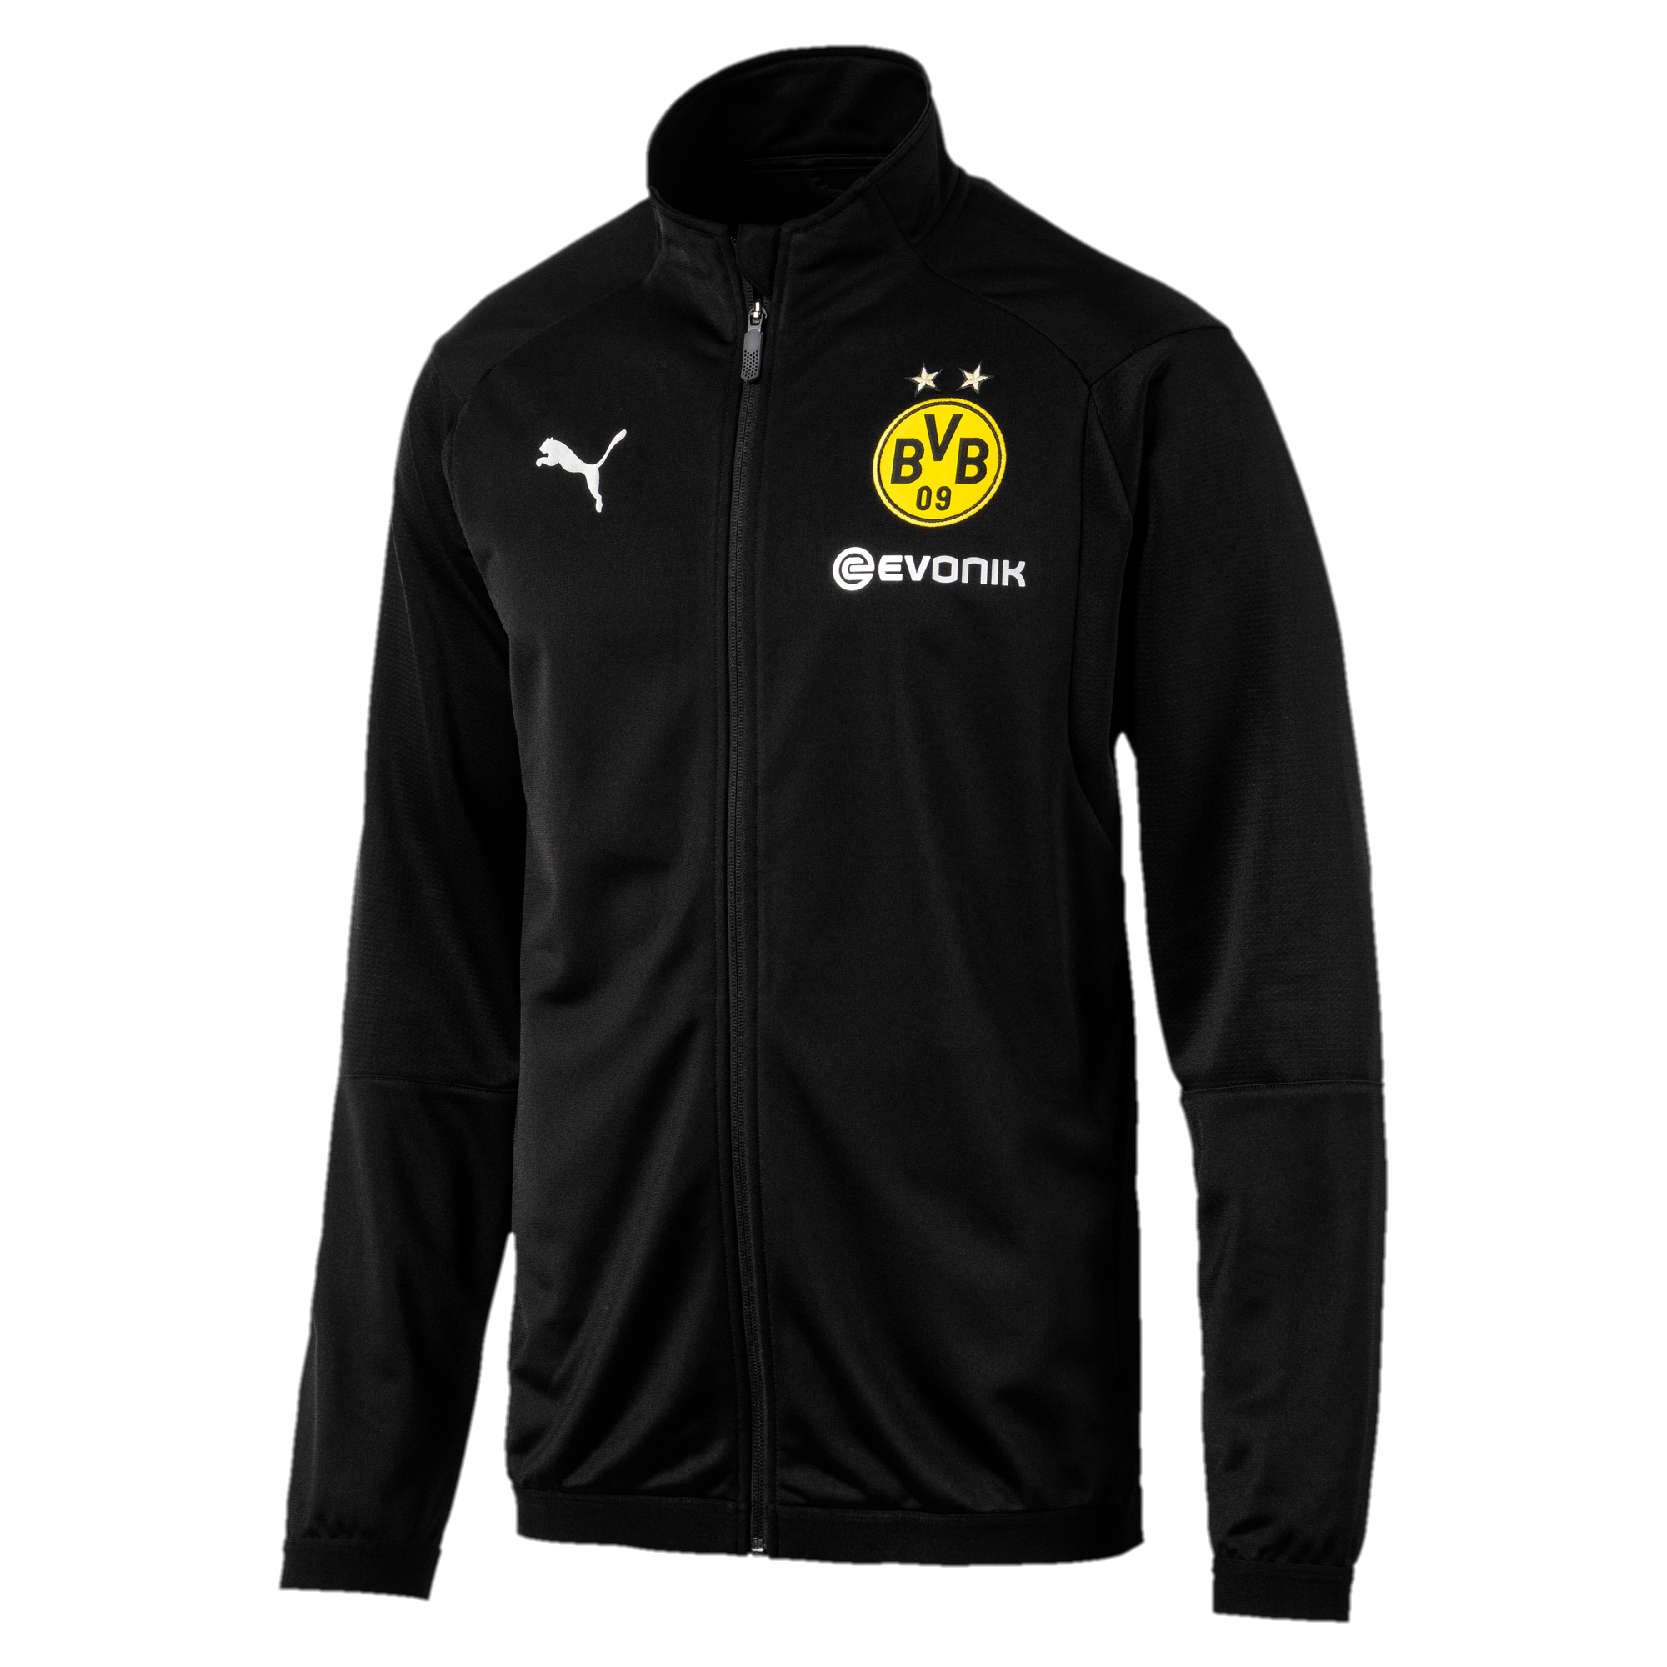 Puma BVB Poly Jacket with Sponsor Herren 753735 02 Borussia Dortmund 2018/2019